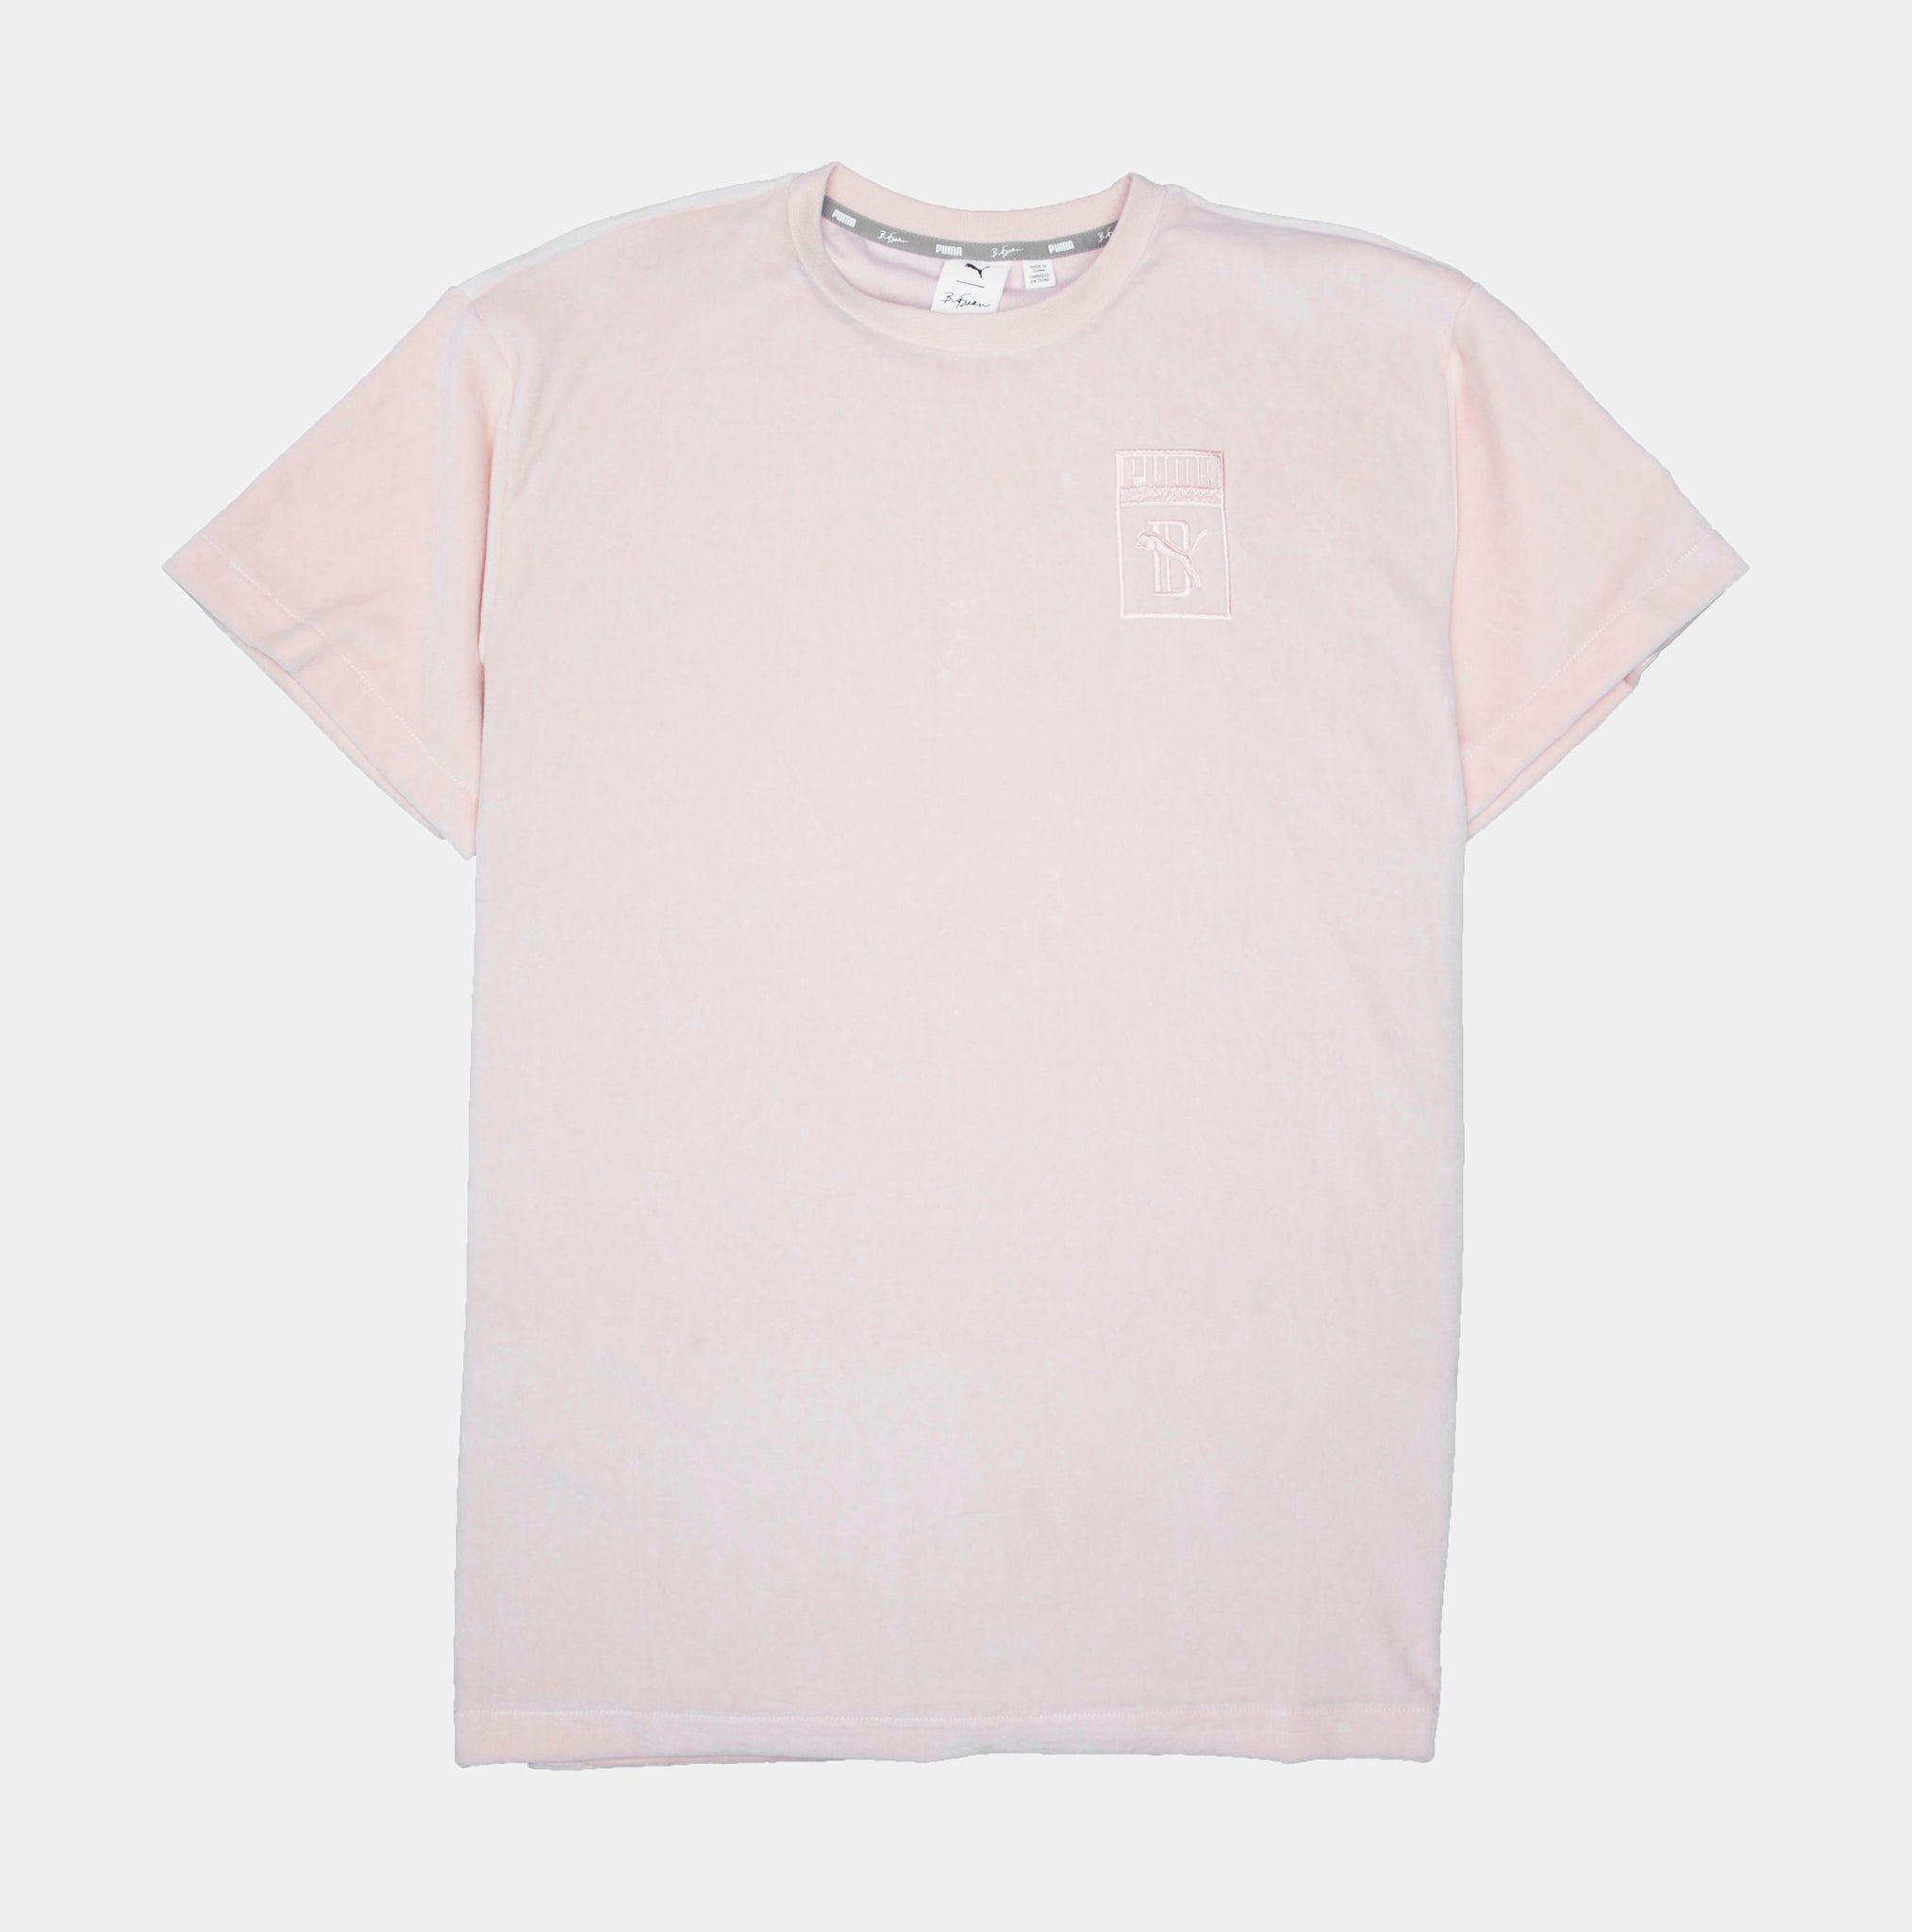 PUMA PUMA Shoe Pink Palace – Collection Free T-Shirt 85 Mens 575918 Big Shipping Sean x